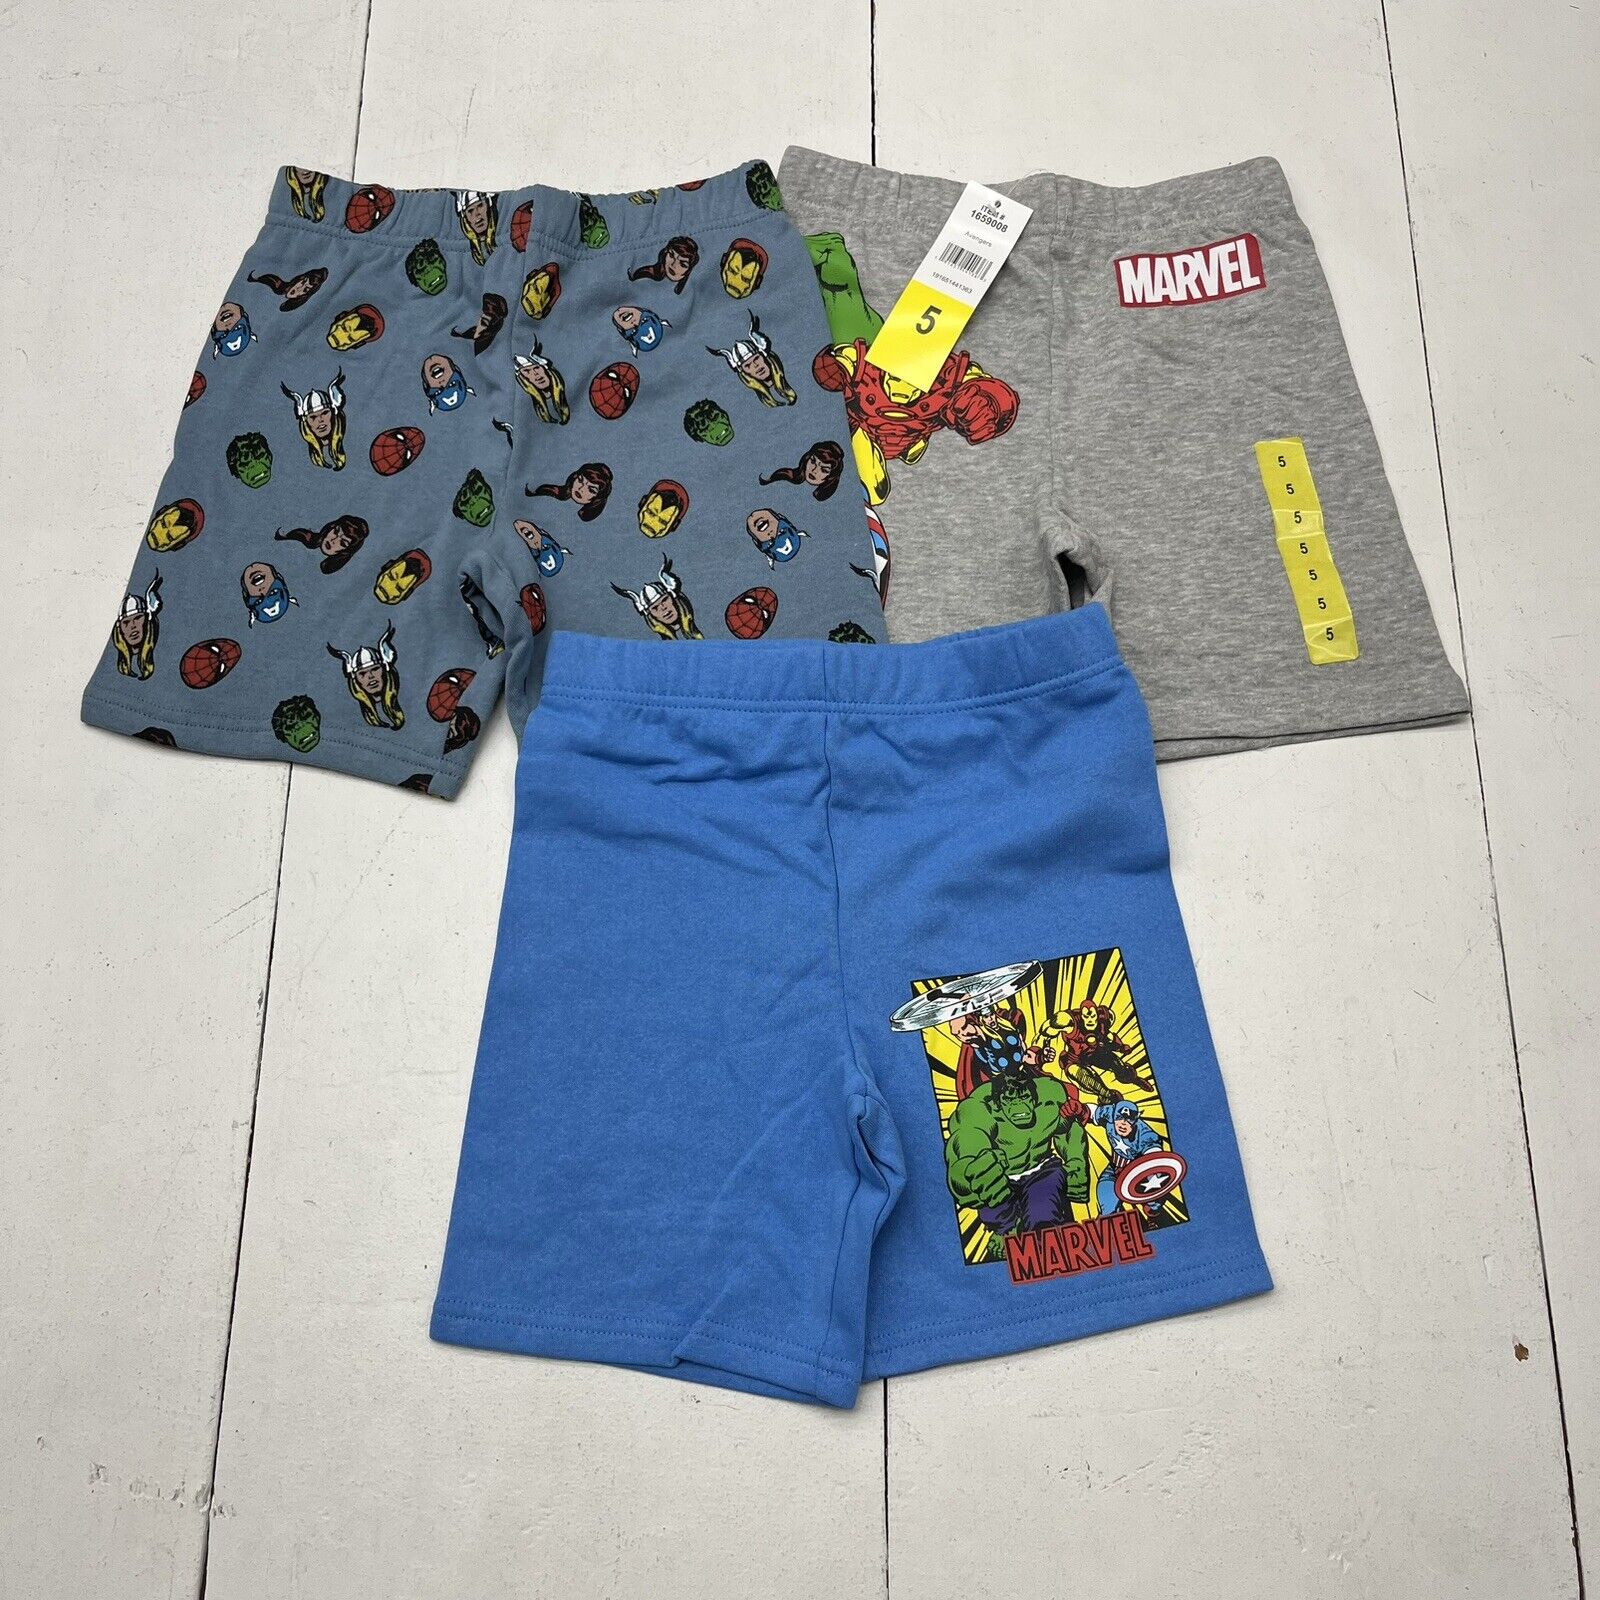 Marvel Avengers Print 3 Pack Shorts Boys Size 5 NEW